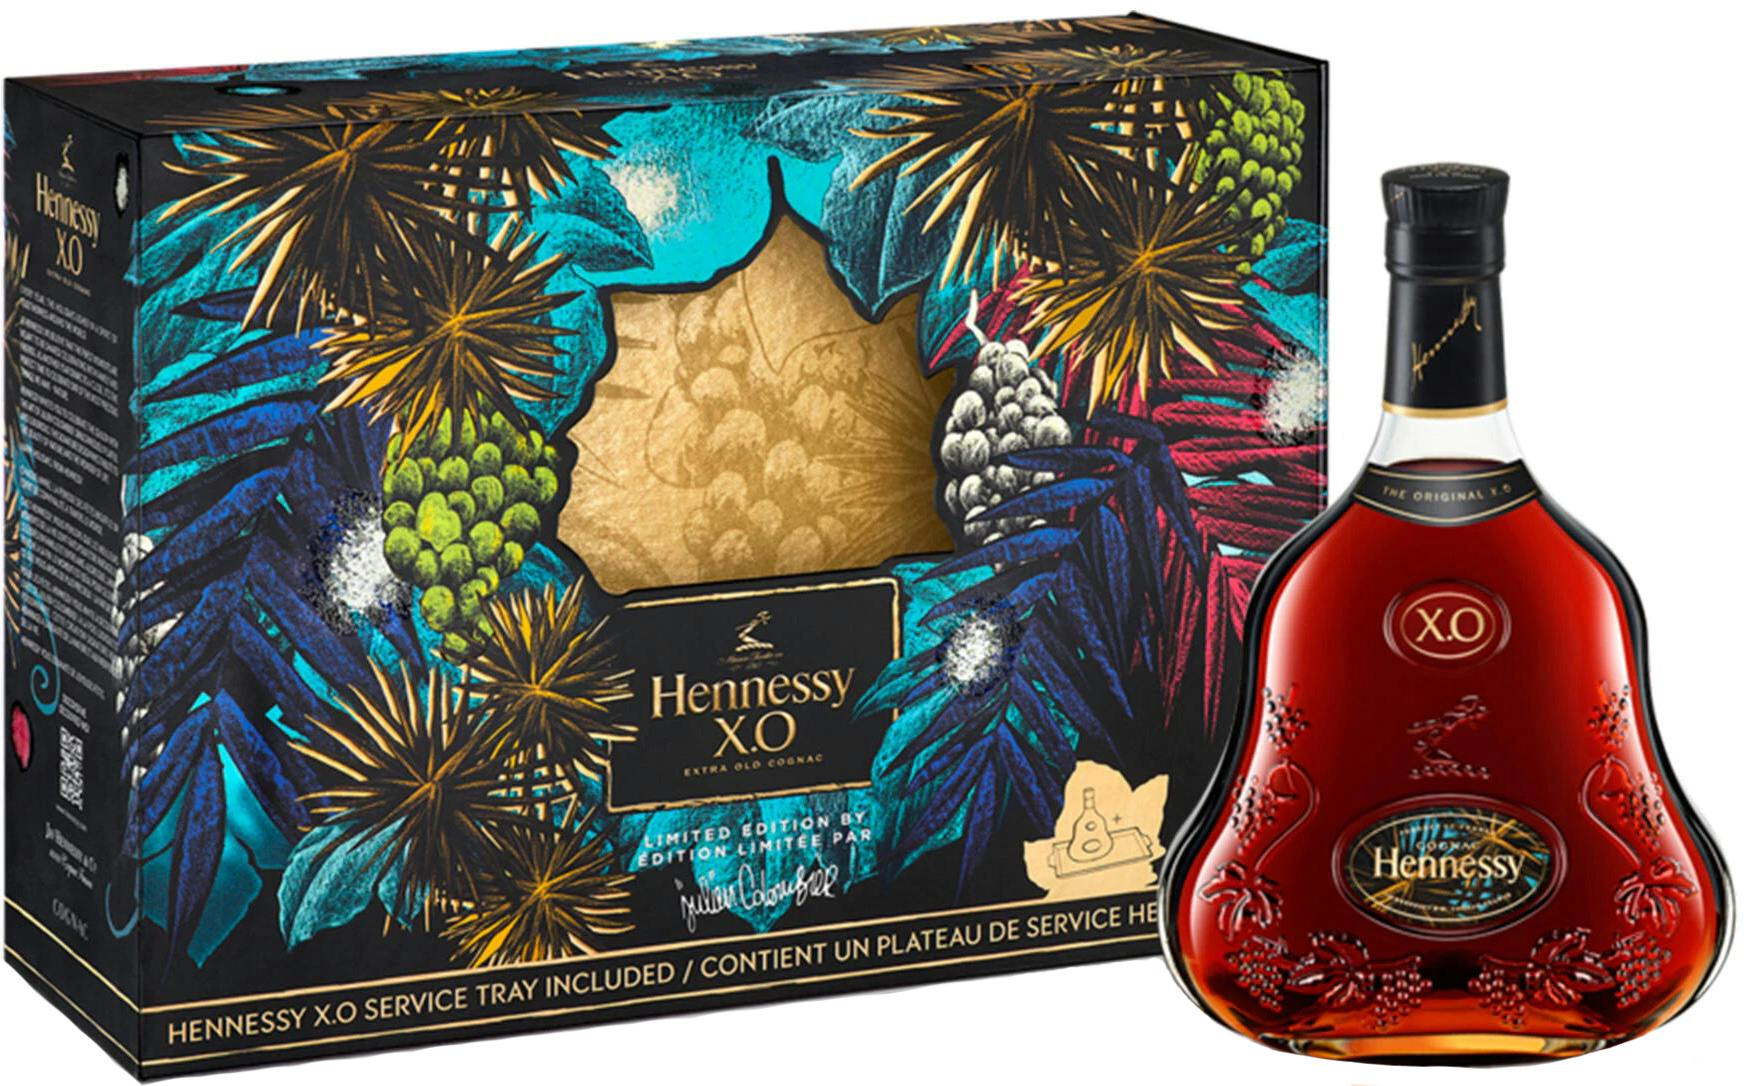 Hennessy X.O cognac